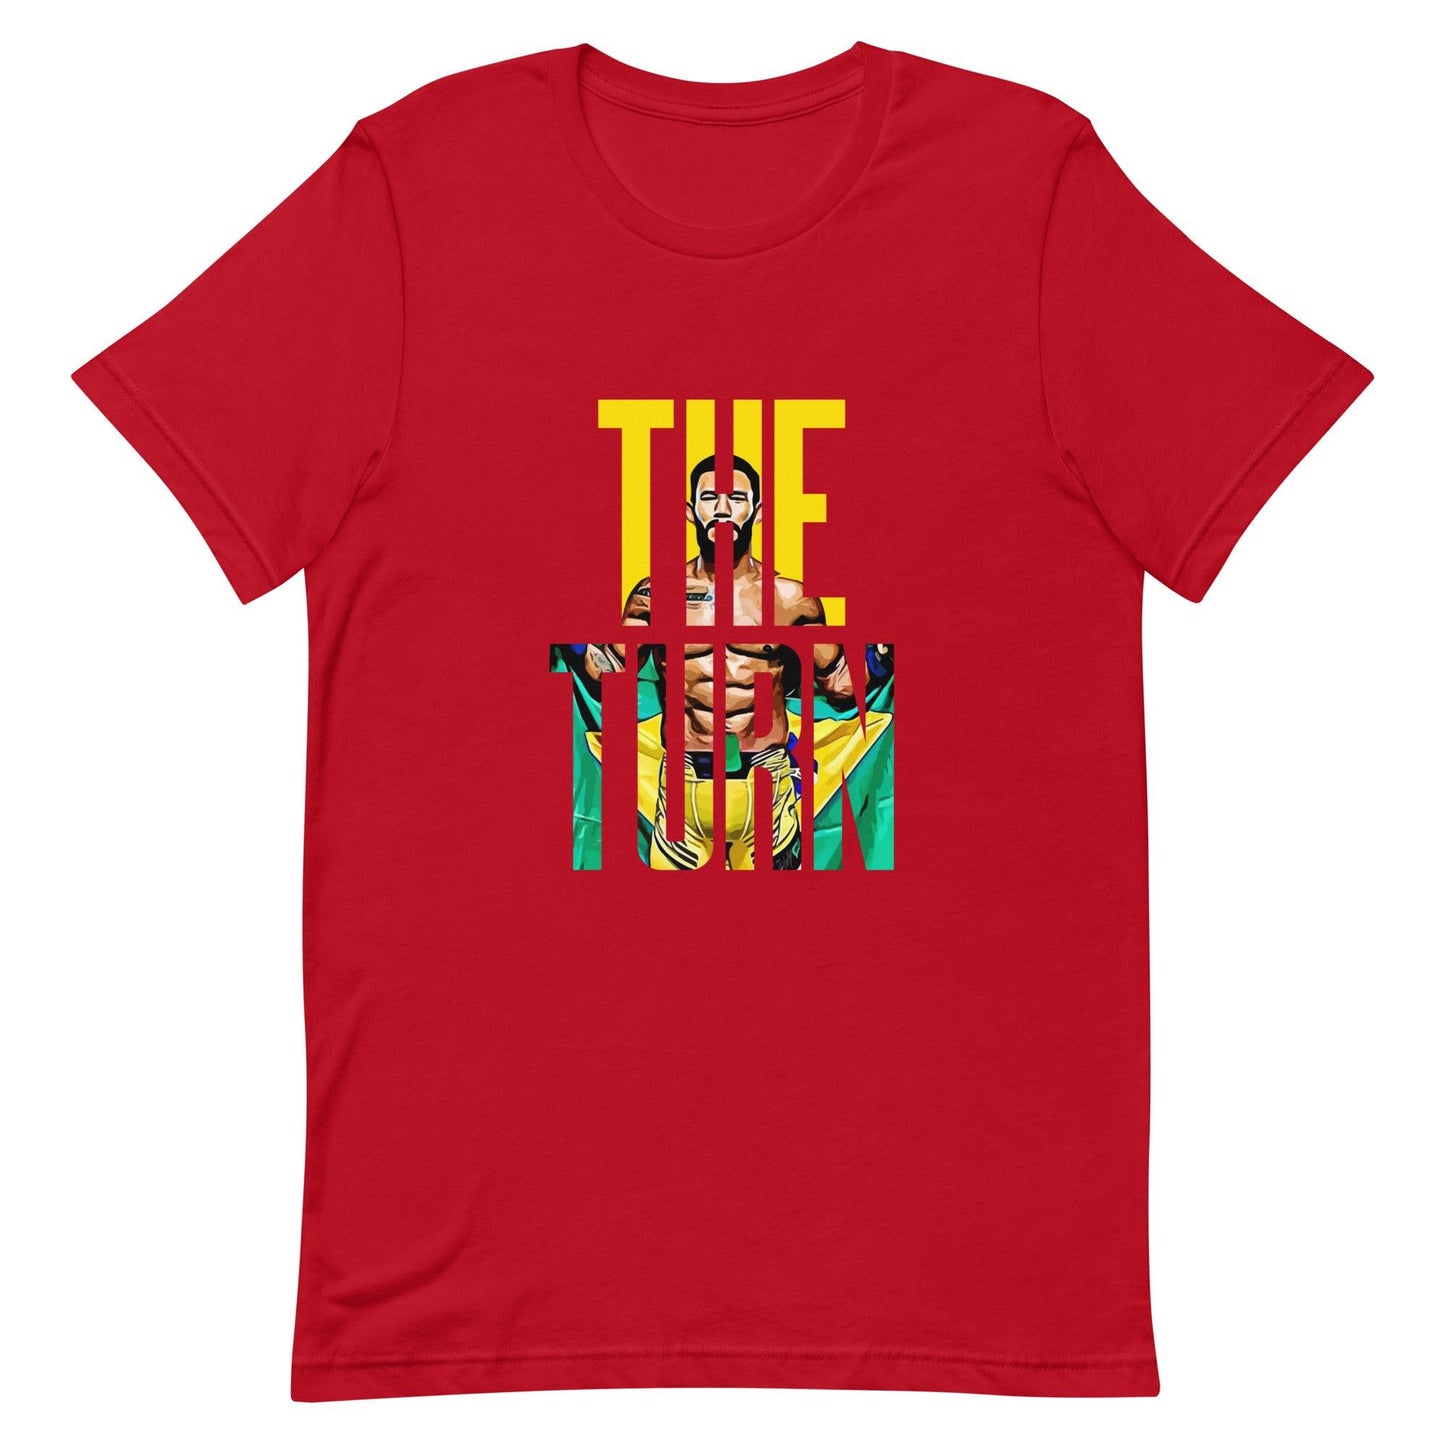 Rafael Alves "The Turn" t-shirt - Fan Arch